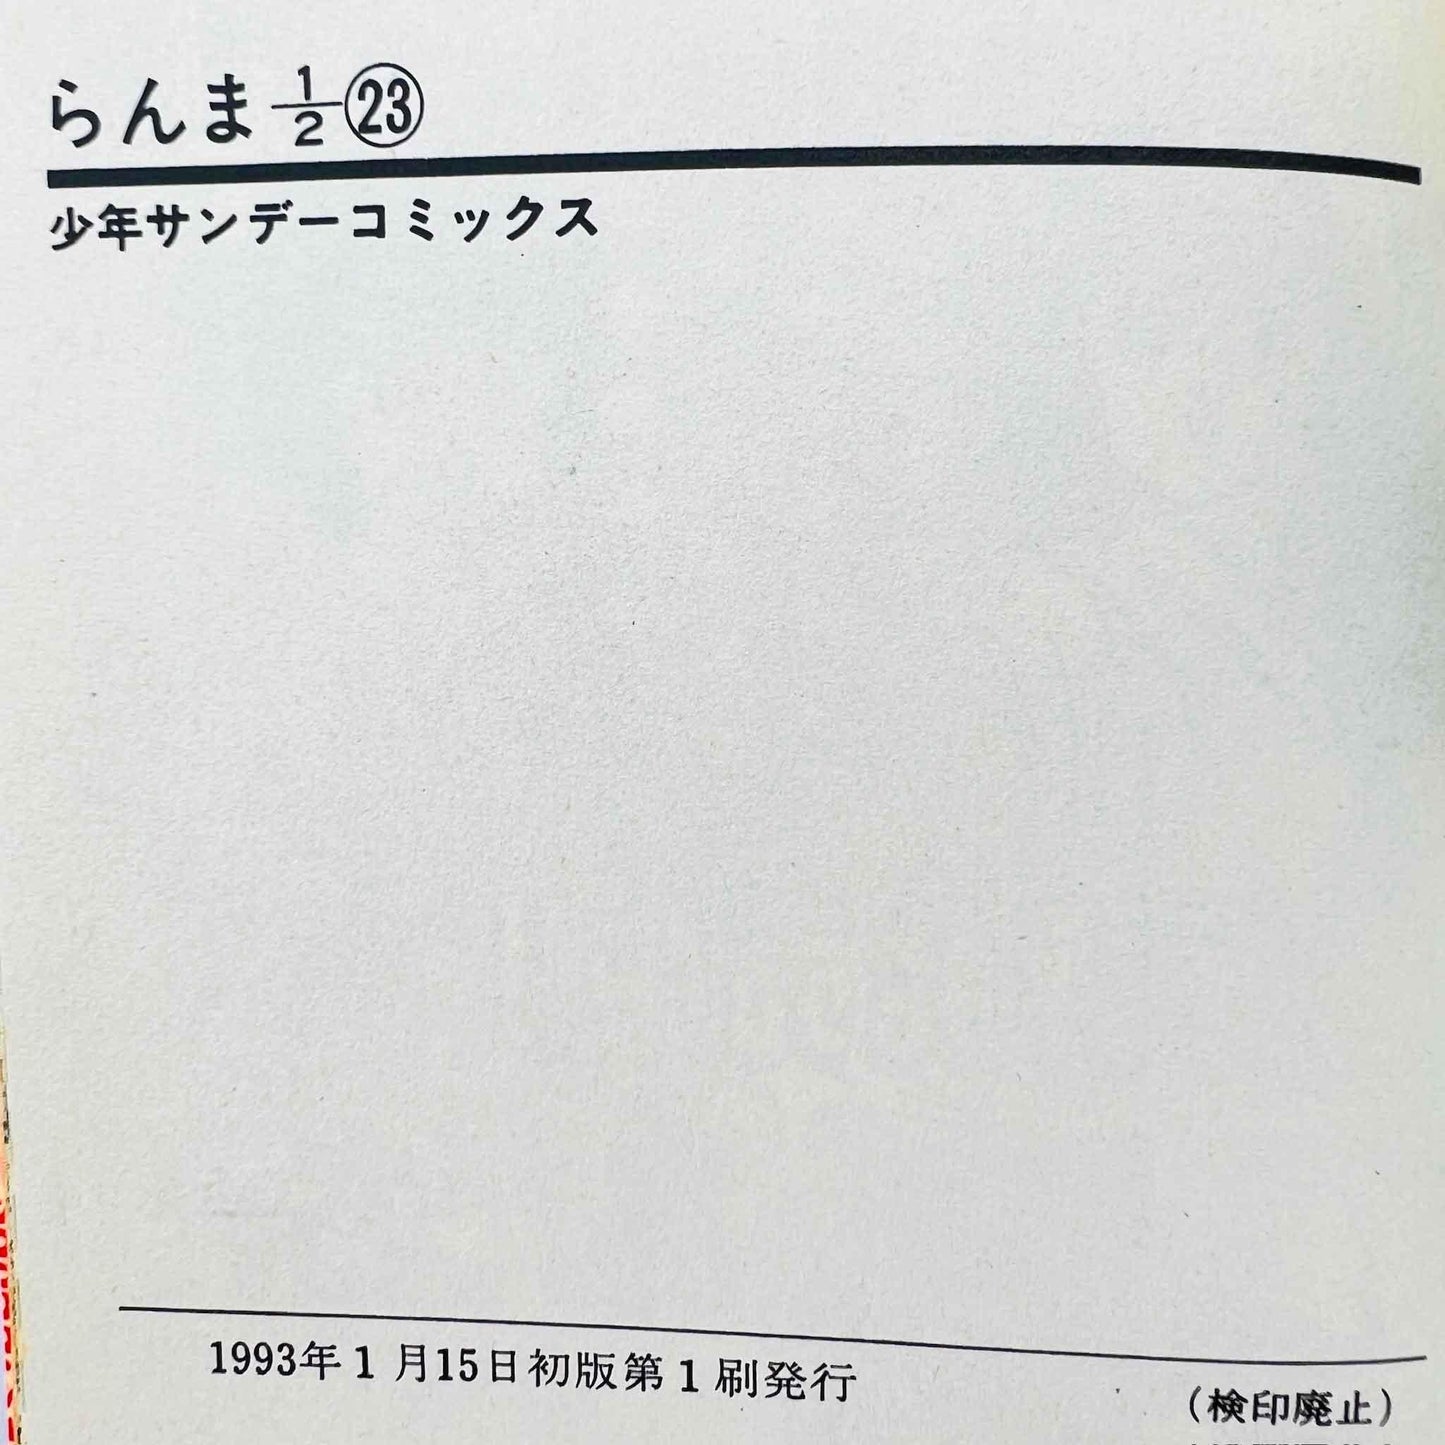 Ranma ½ - Volume 23 - 1stPrint.net - 1st First Print Edition Manga Store - M-RANMA-23-001